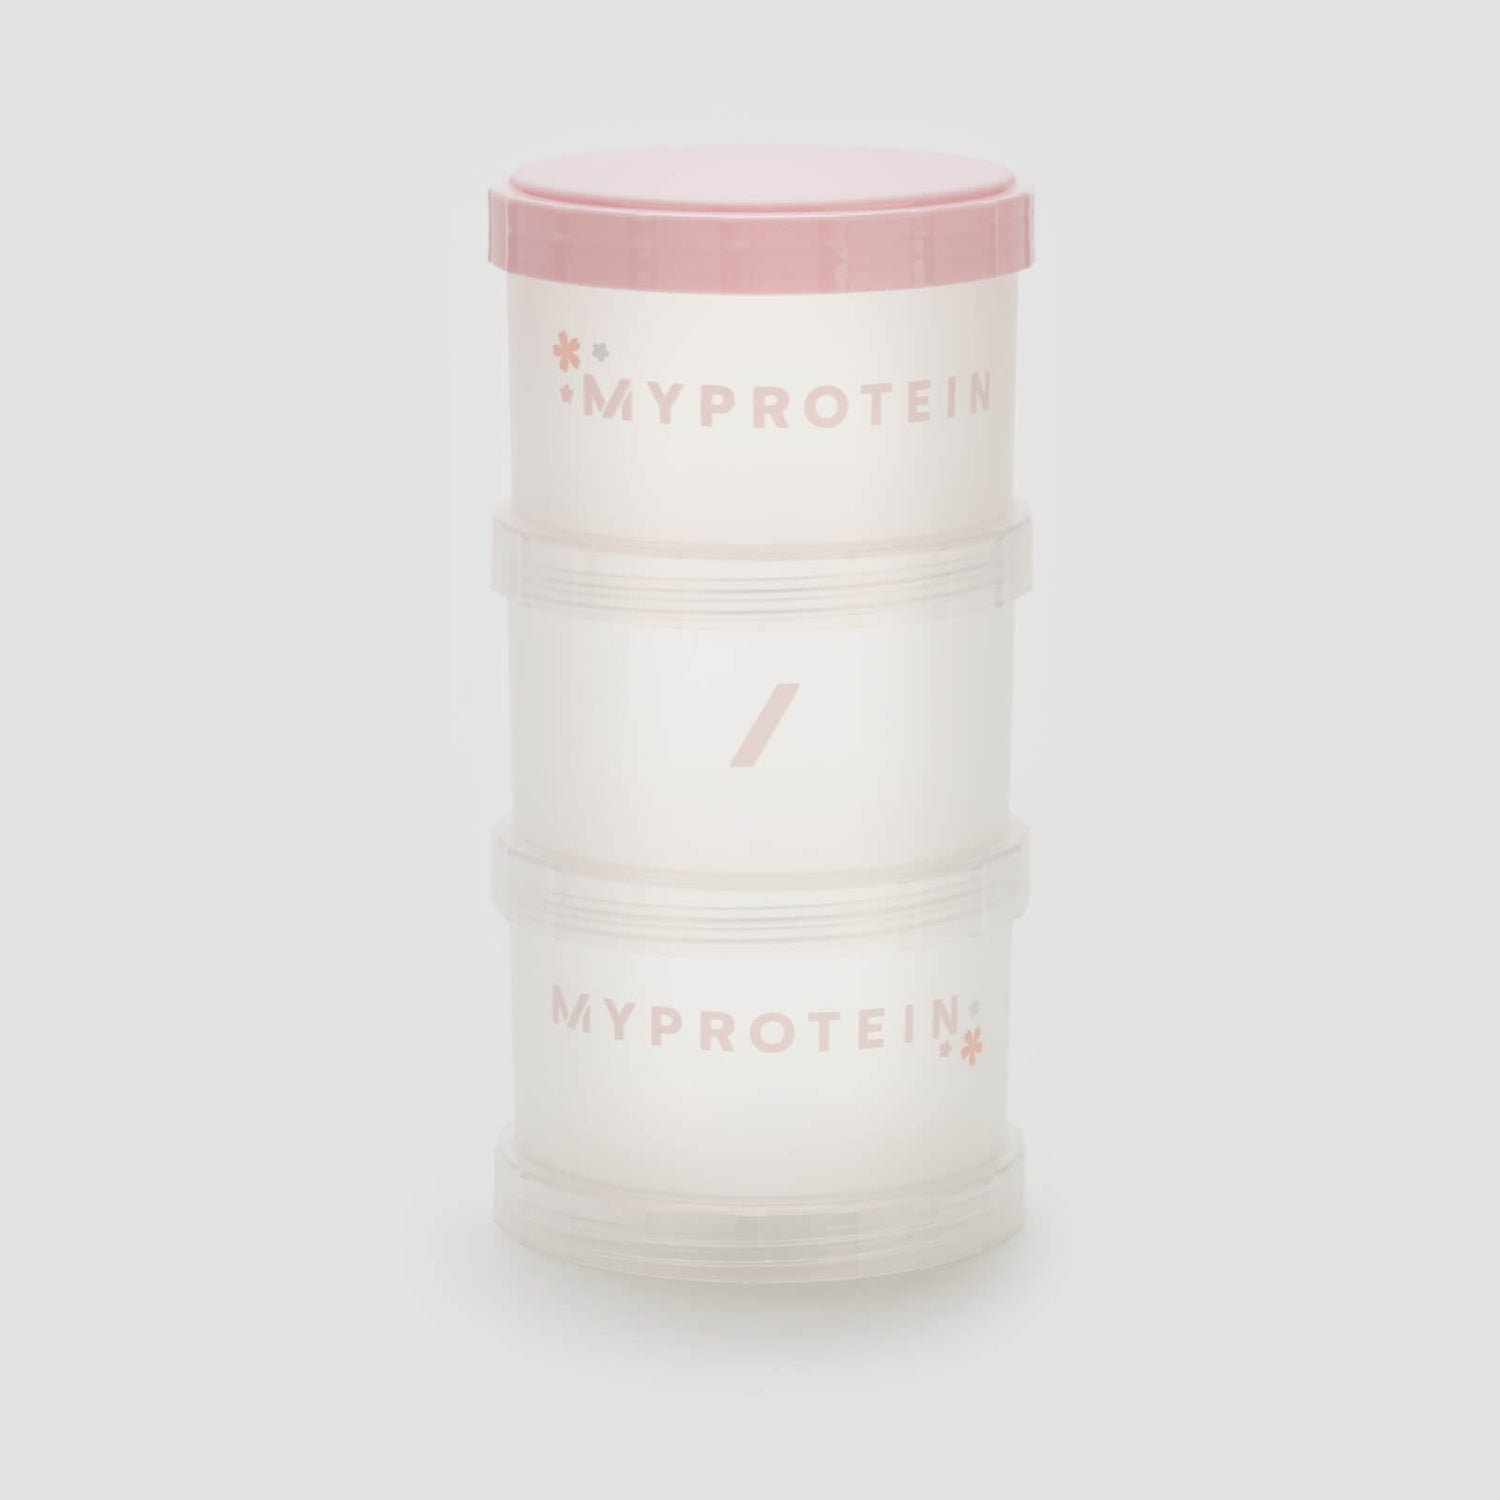 Myprotein Cherry Blossom樱花系列分装盒 - 粉红色